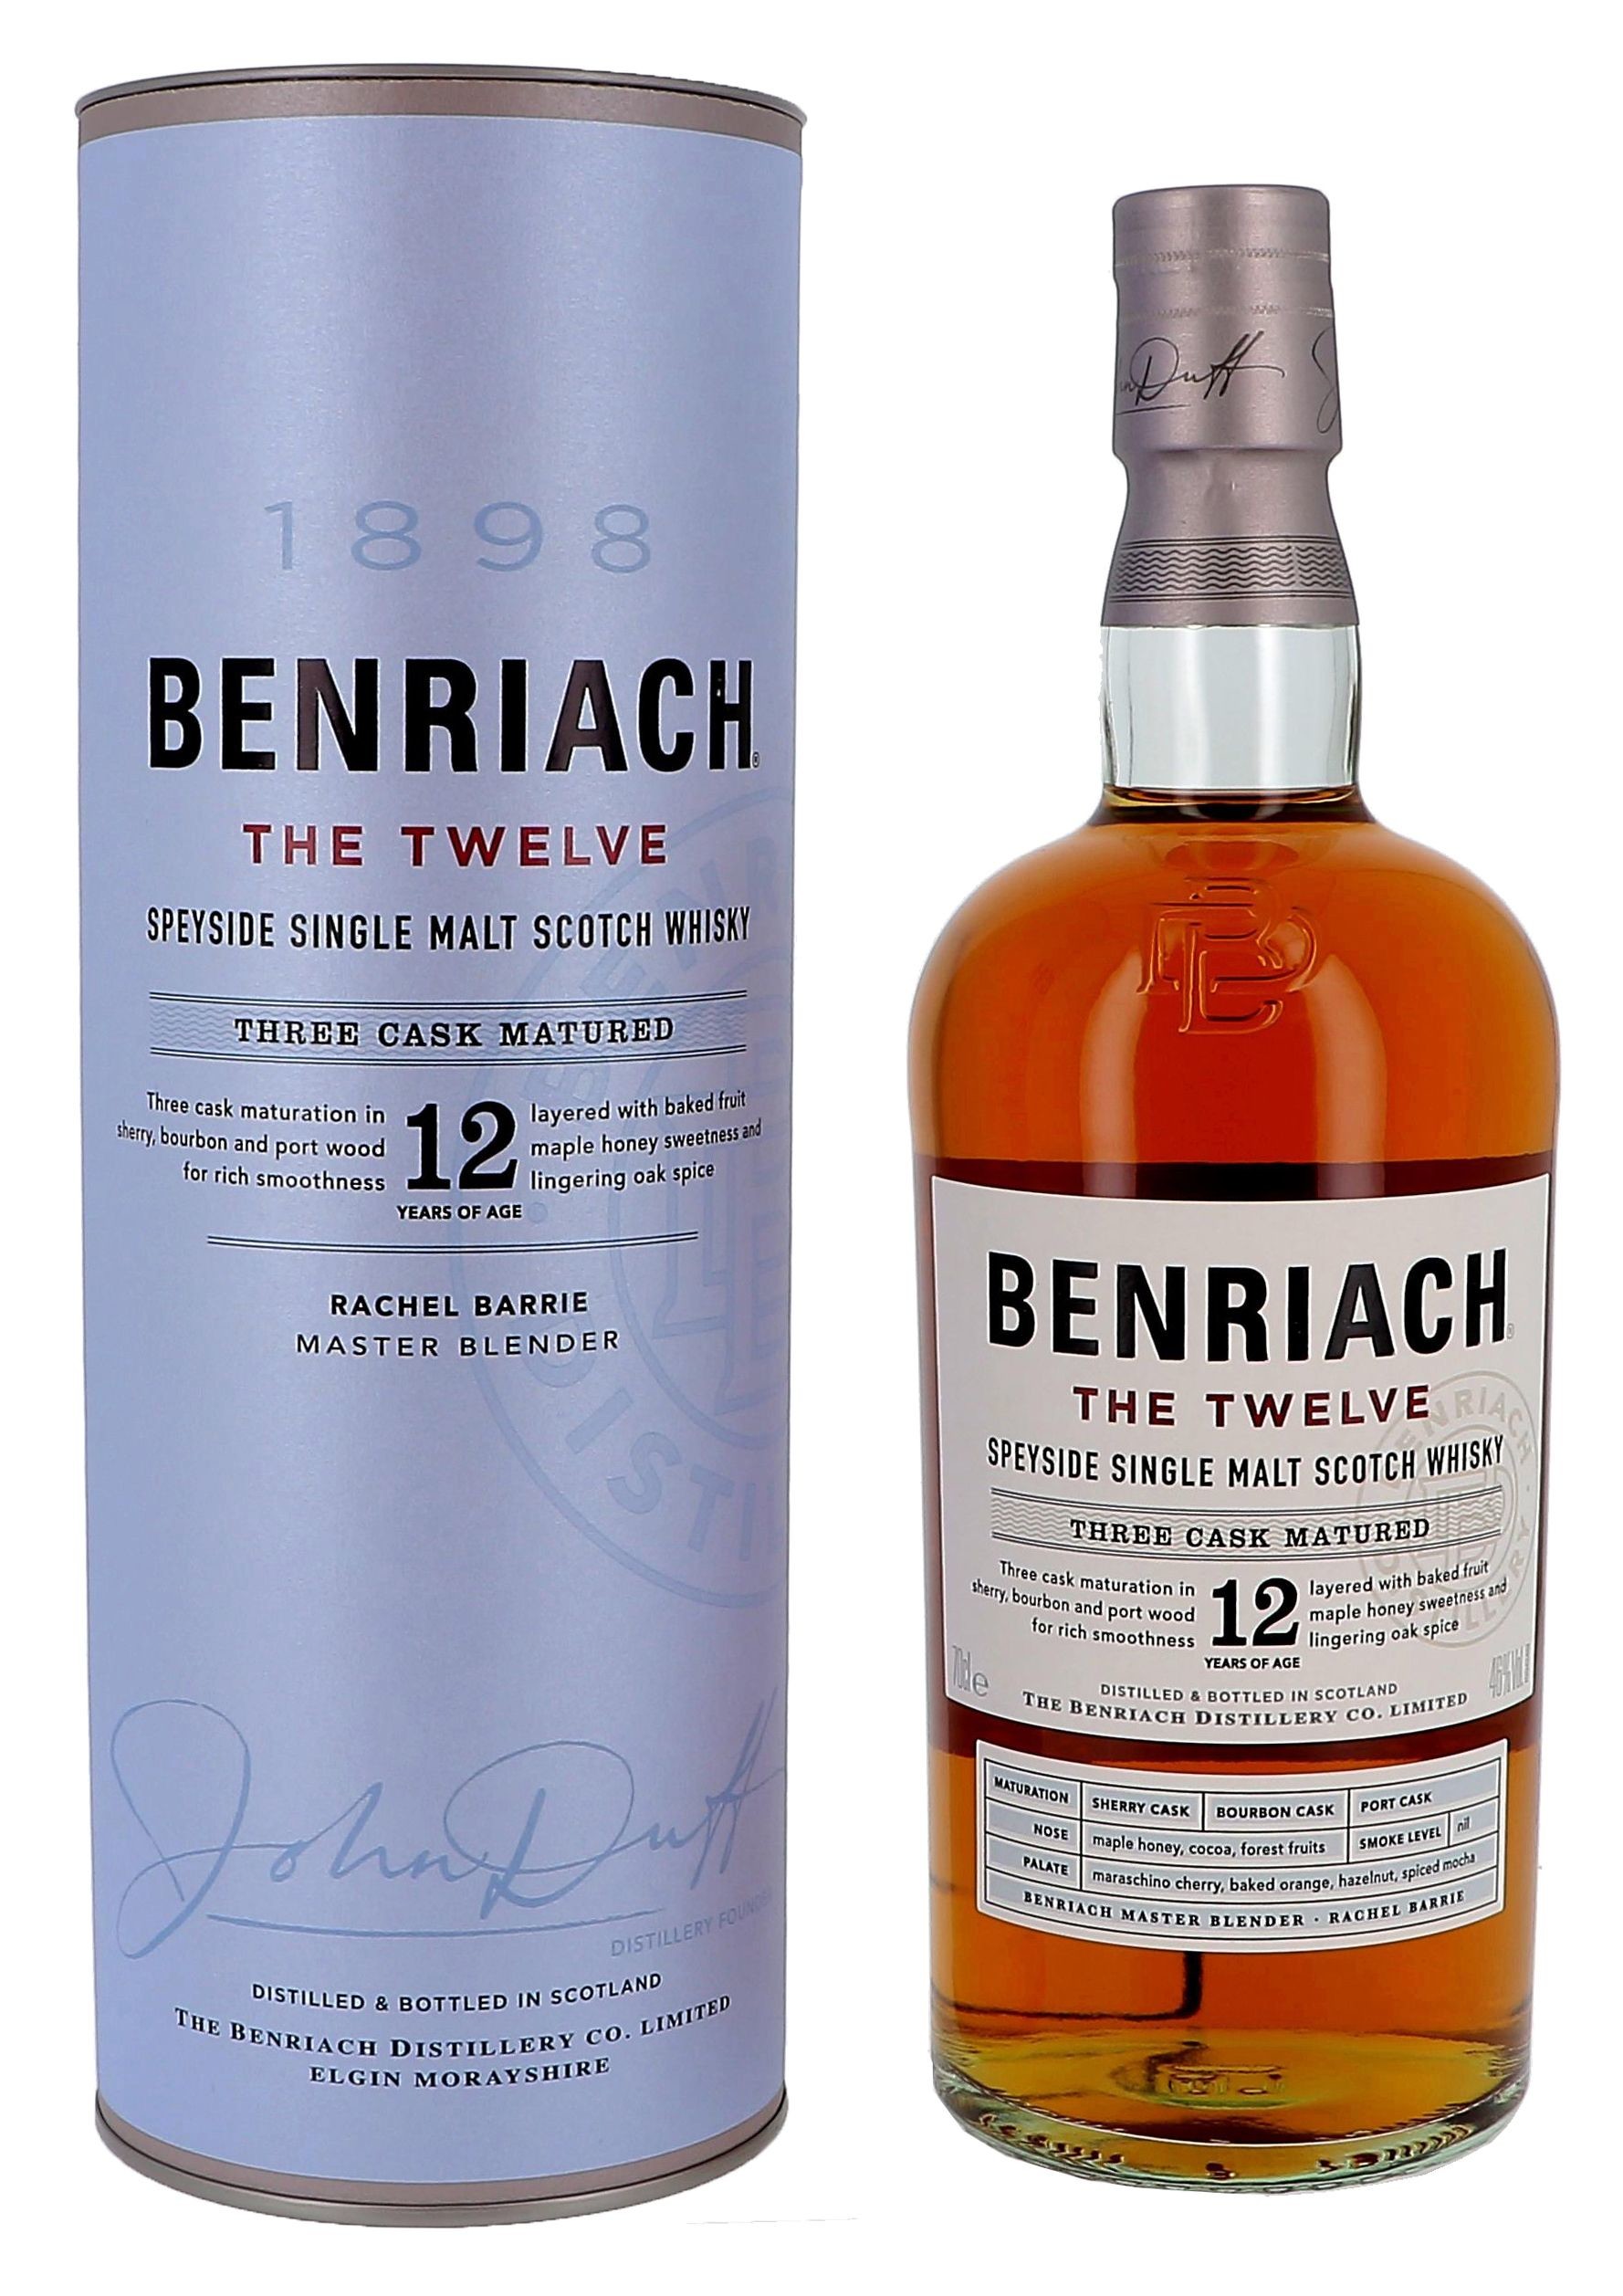 Benriach 10 Years 70cl 43% Highland Single Malt Scotch Whisky